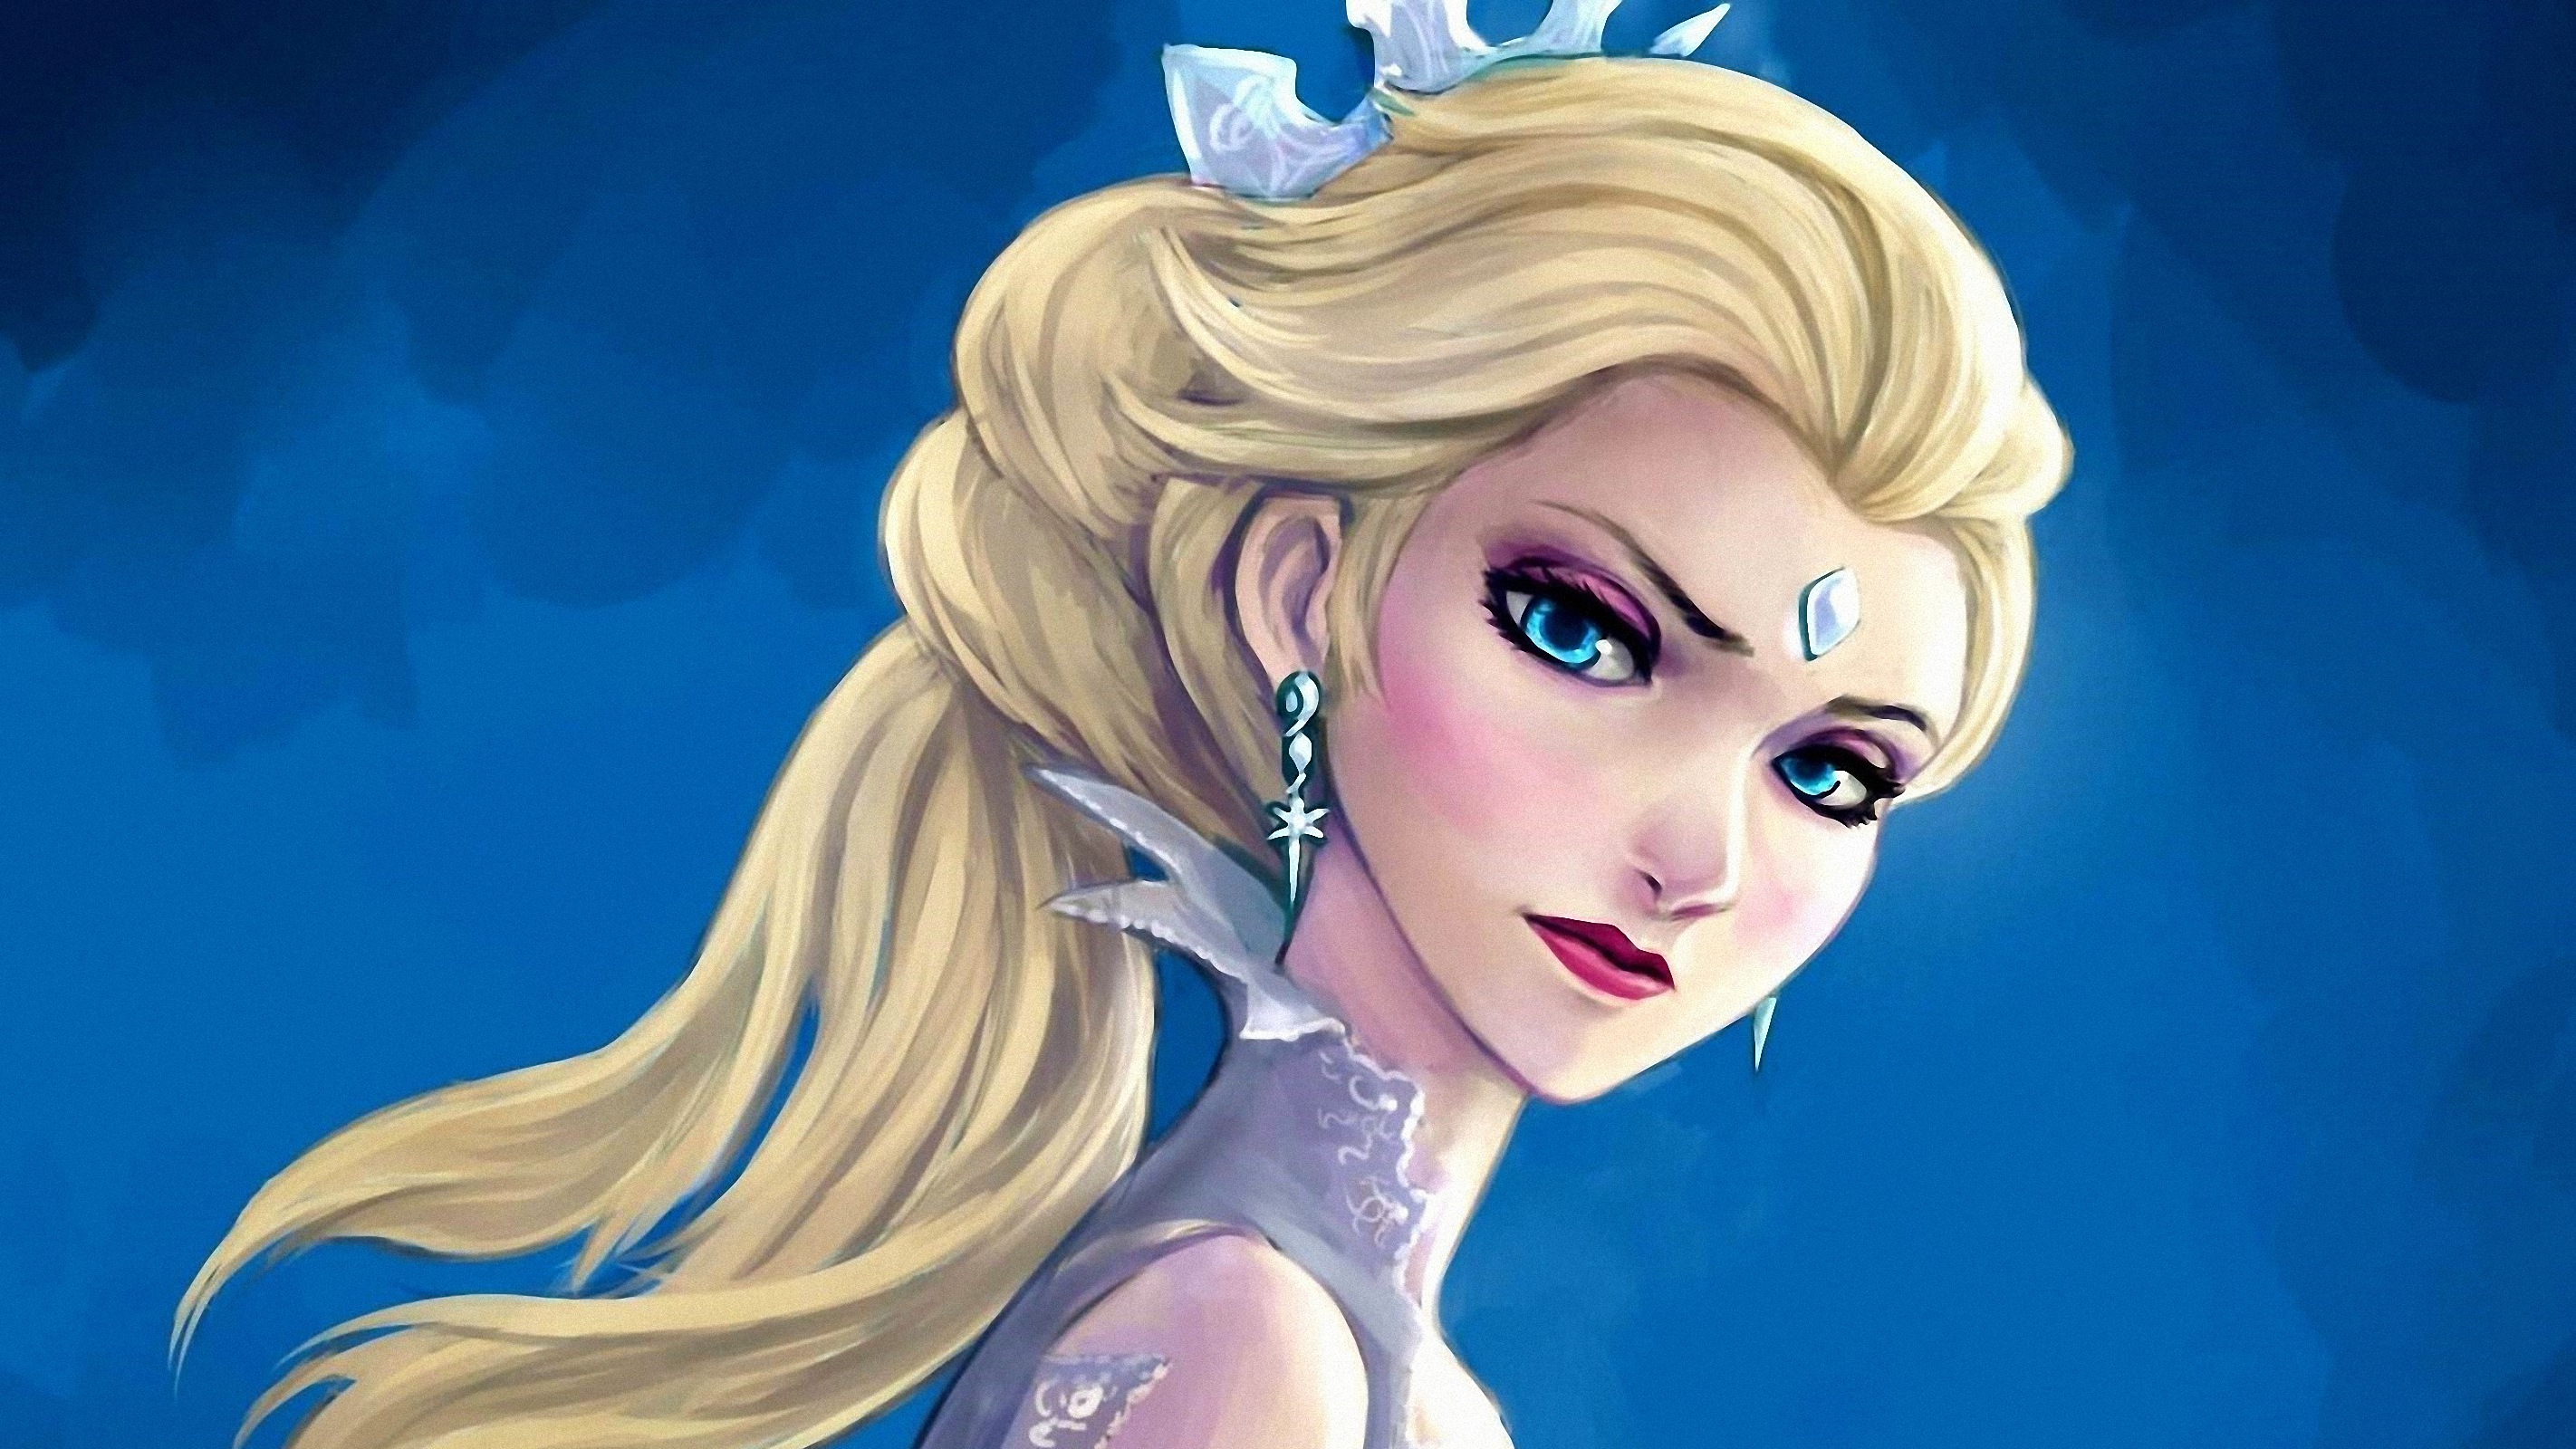 Mobile wallpaper: Frozen, Movie, Disney, Frozen (Movie), Elsa (Frozen),  715095 download the picture for free.